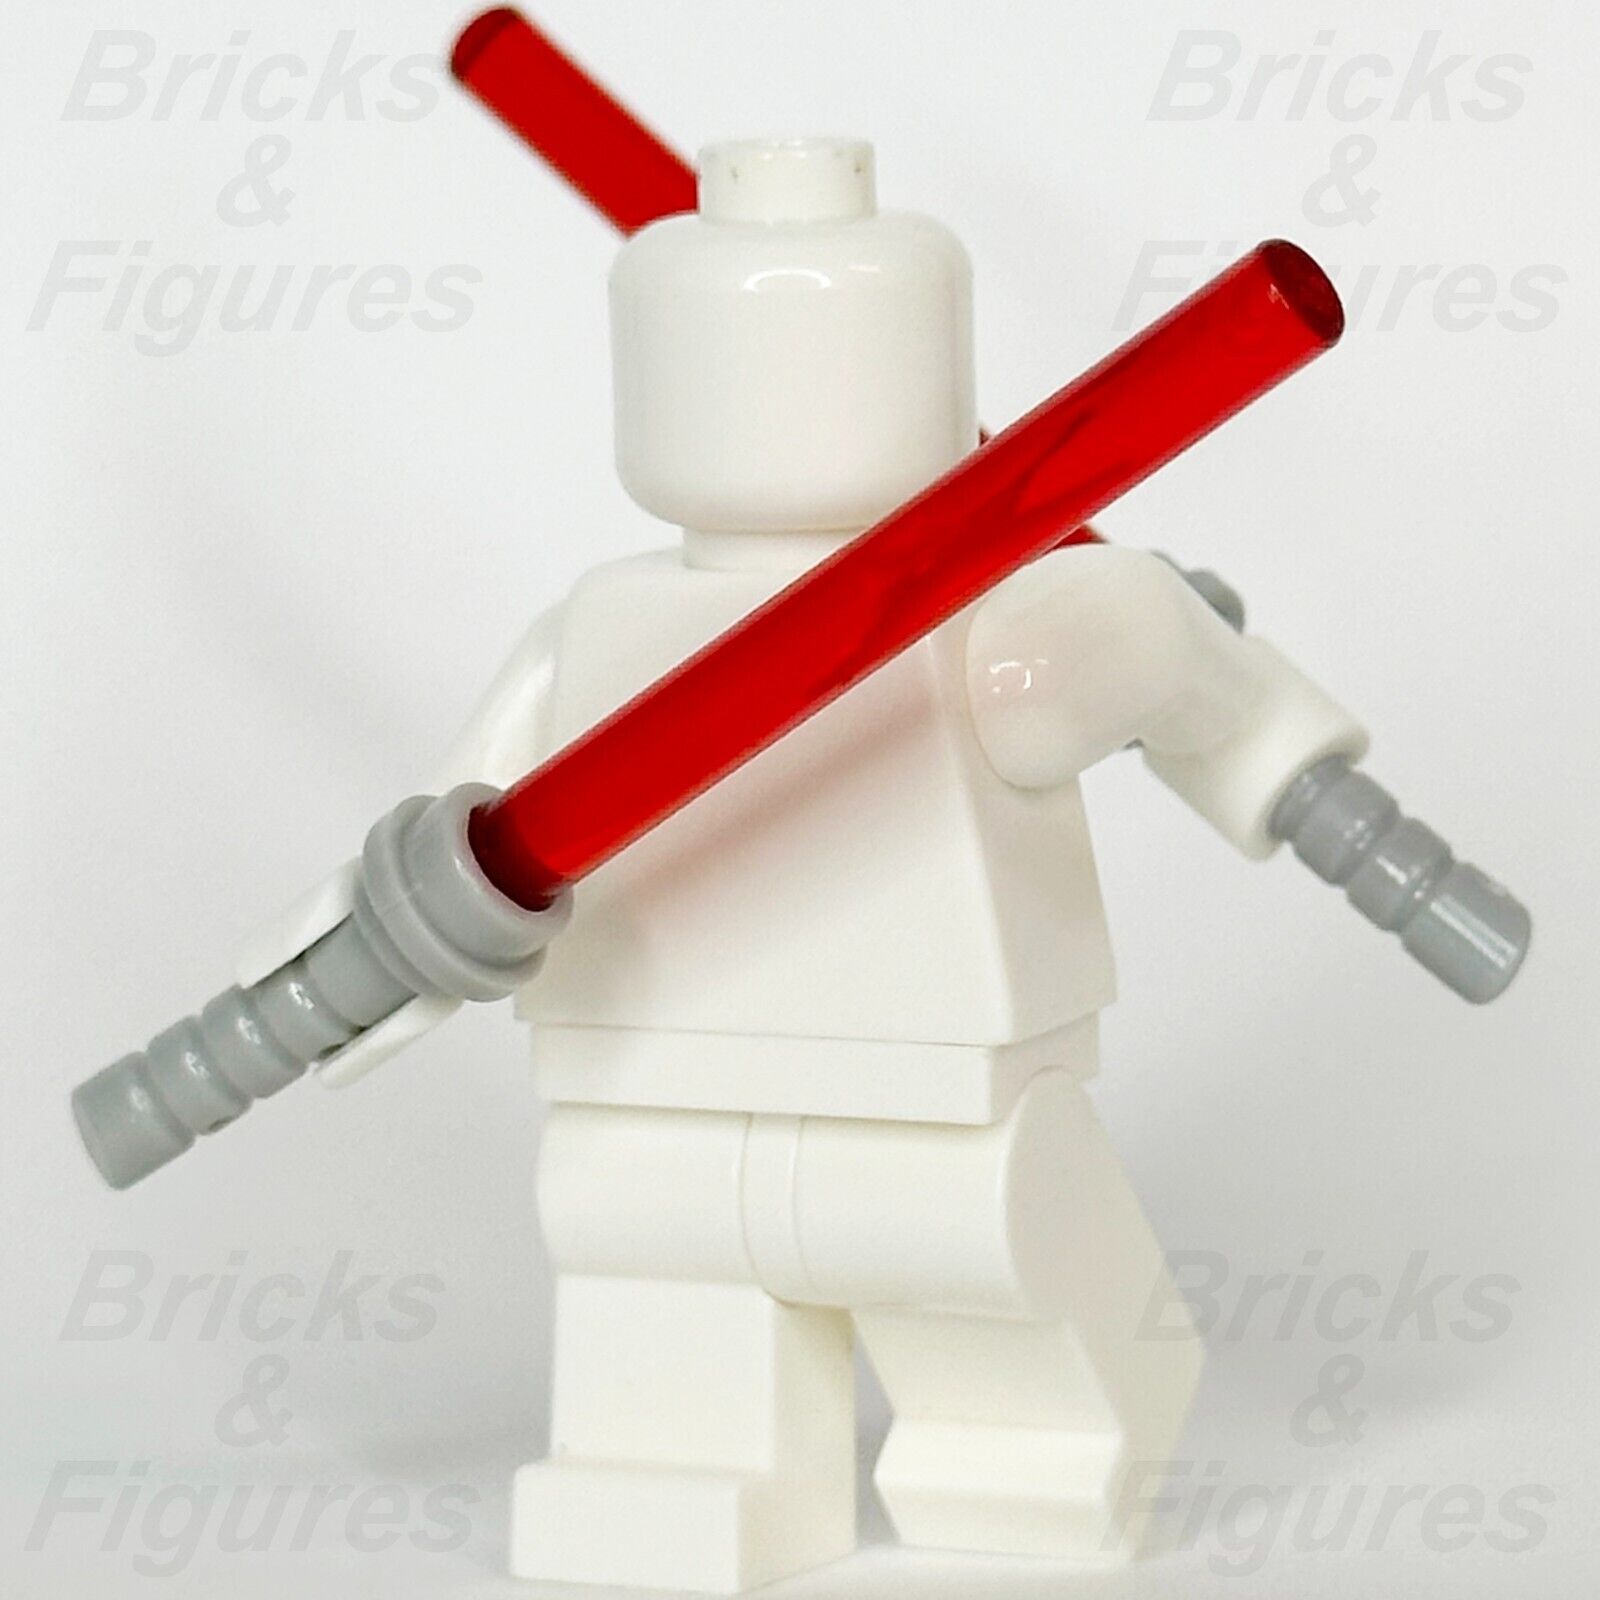 LEGO Star Wars Asajj Ventress Lightsaber Minifigure Part Red Curved 61199 x 2